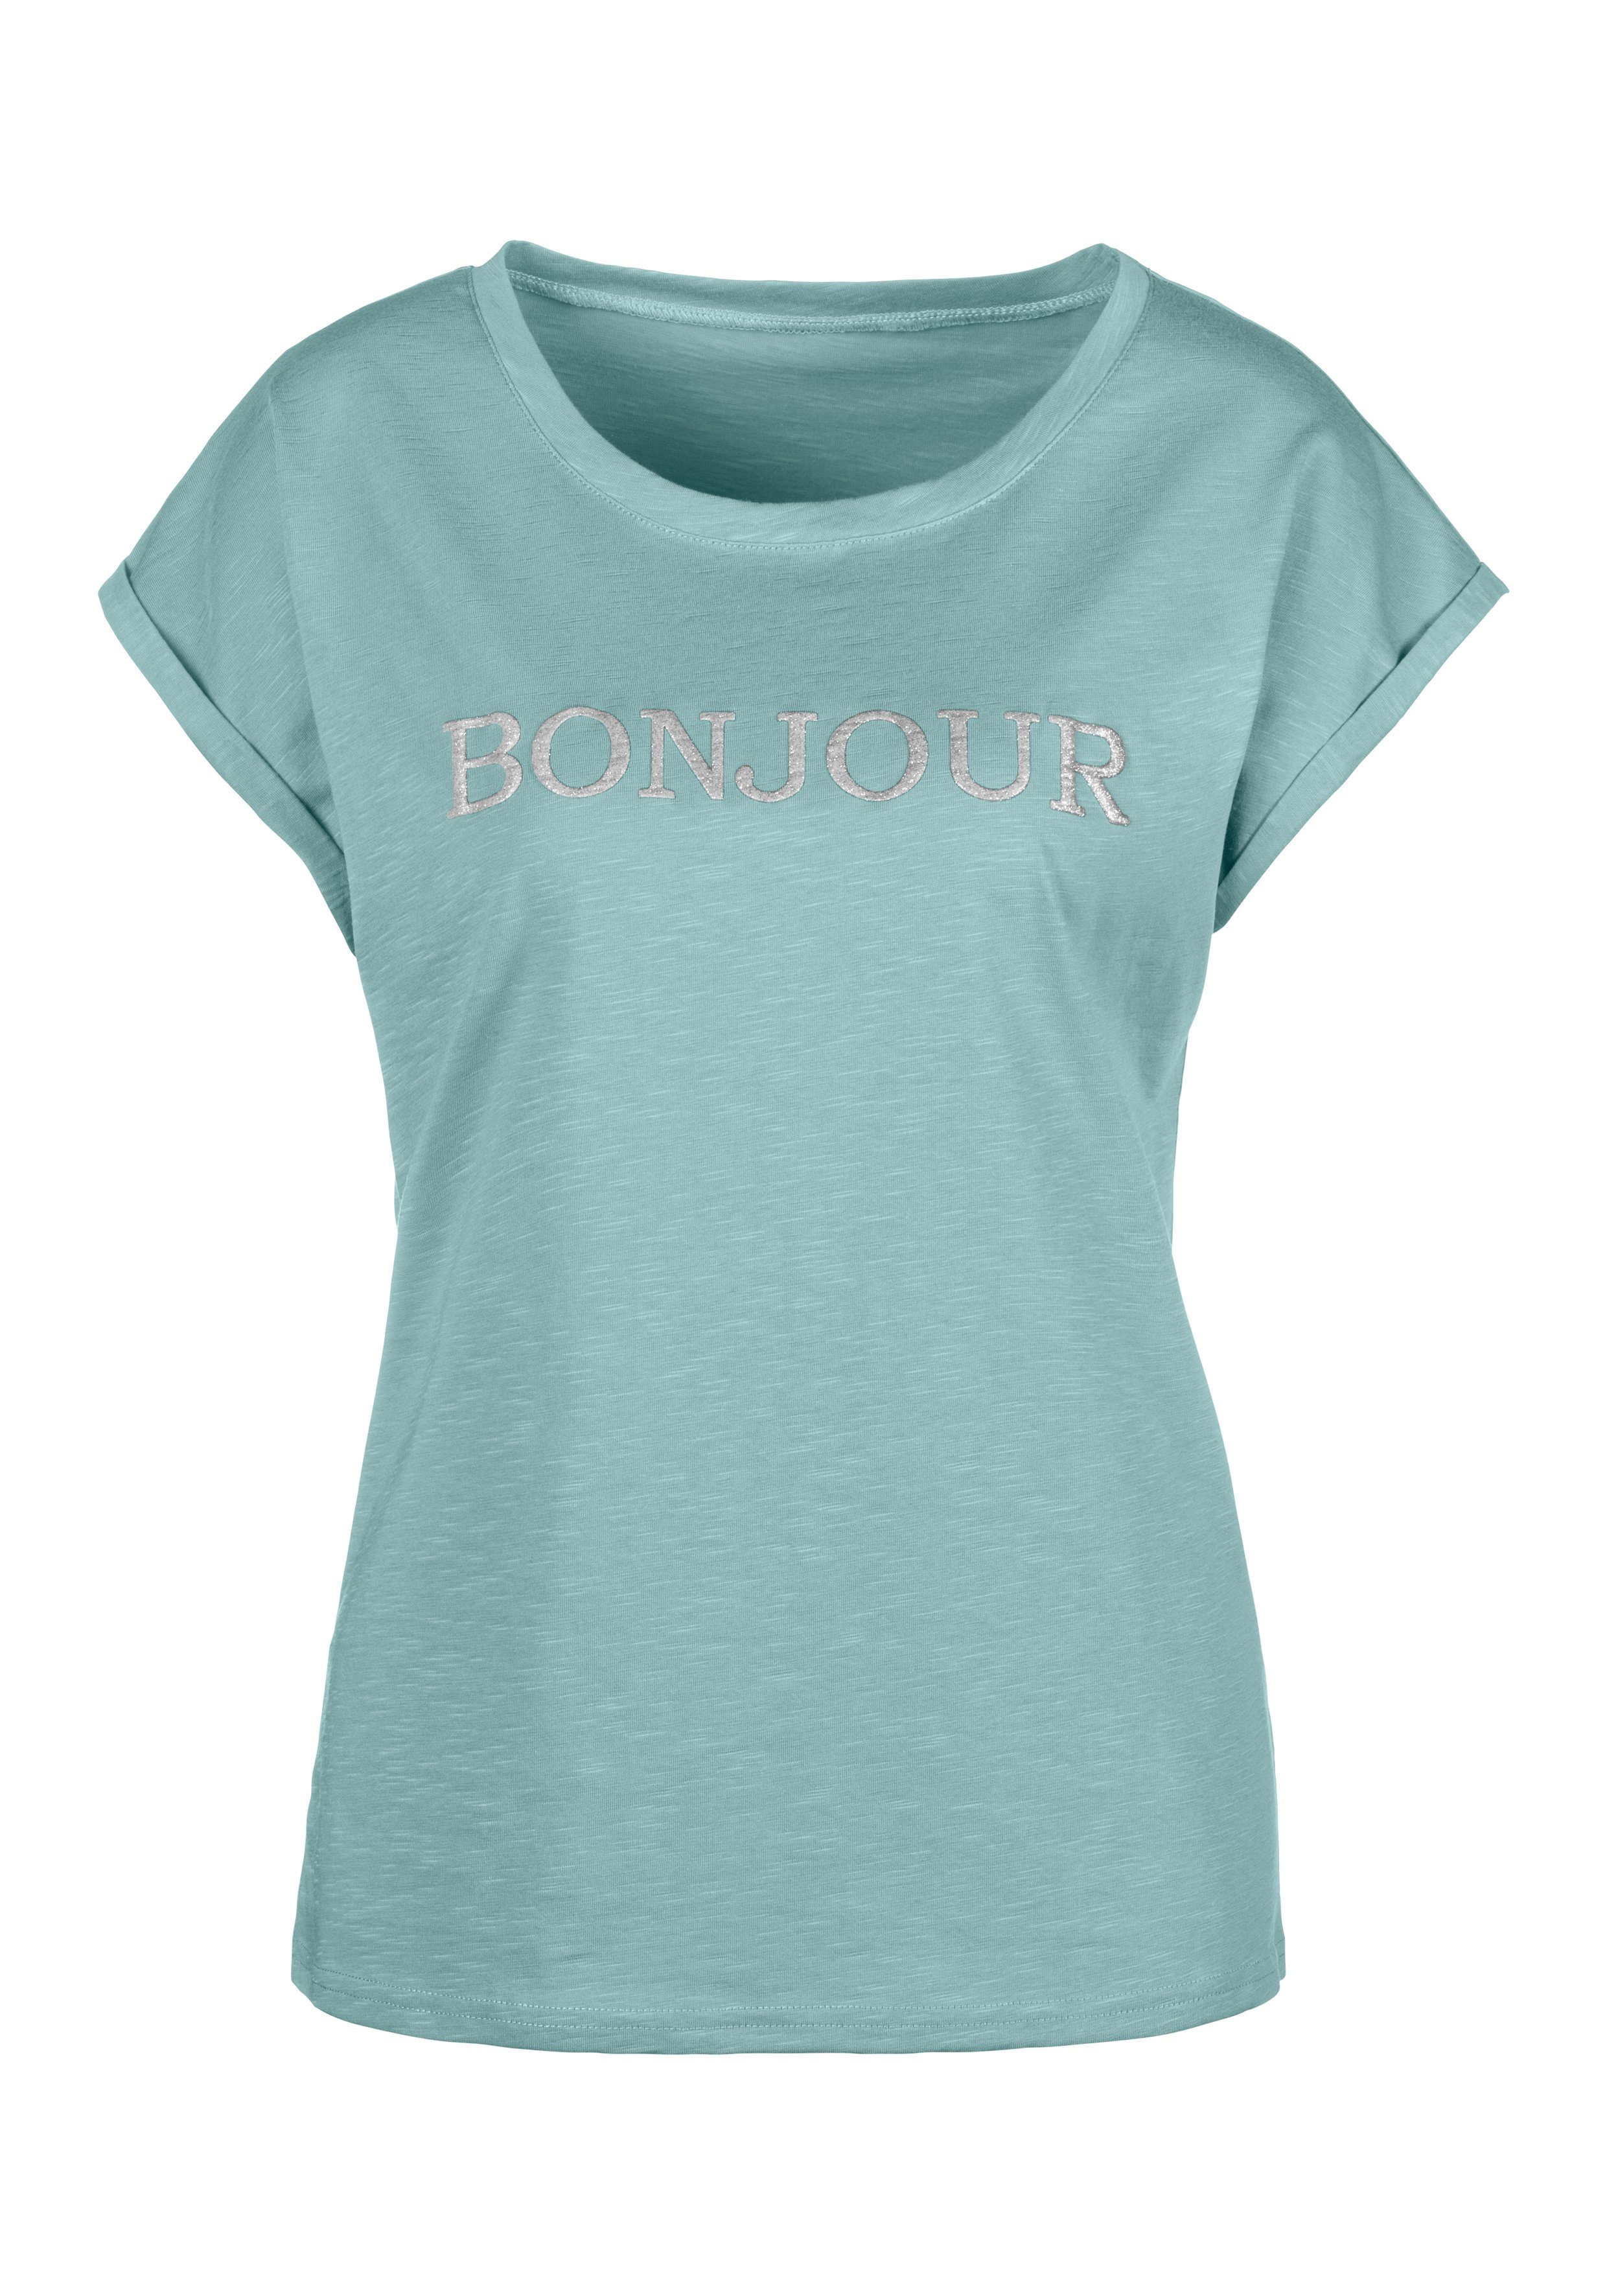 Vivance T-Shirt mit "Bonjour" mint Frontdruck modischem